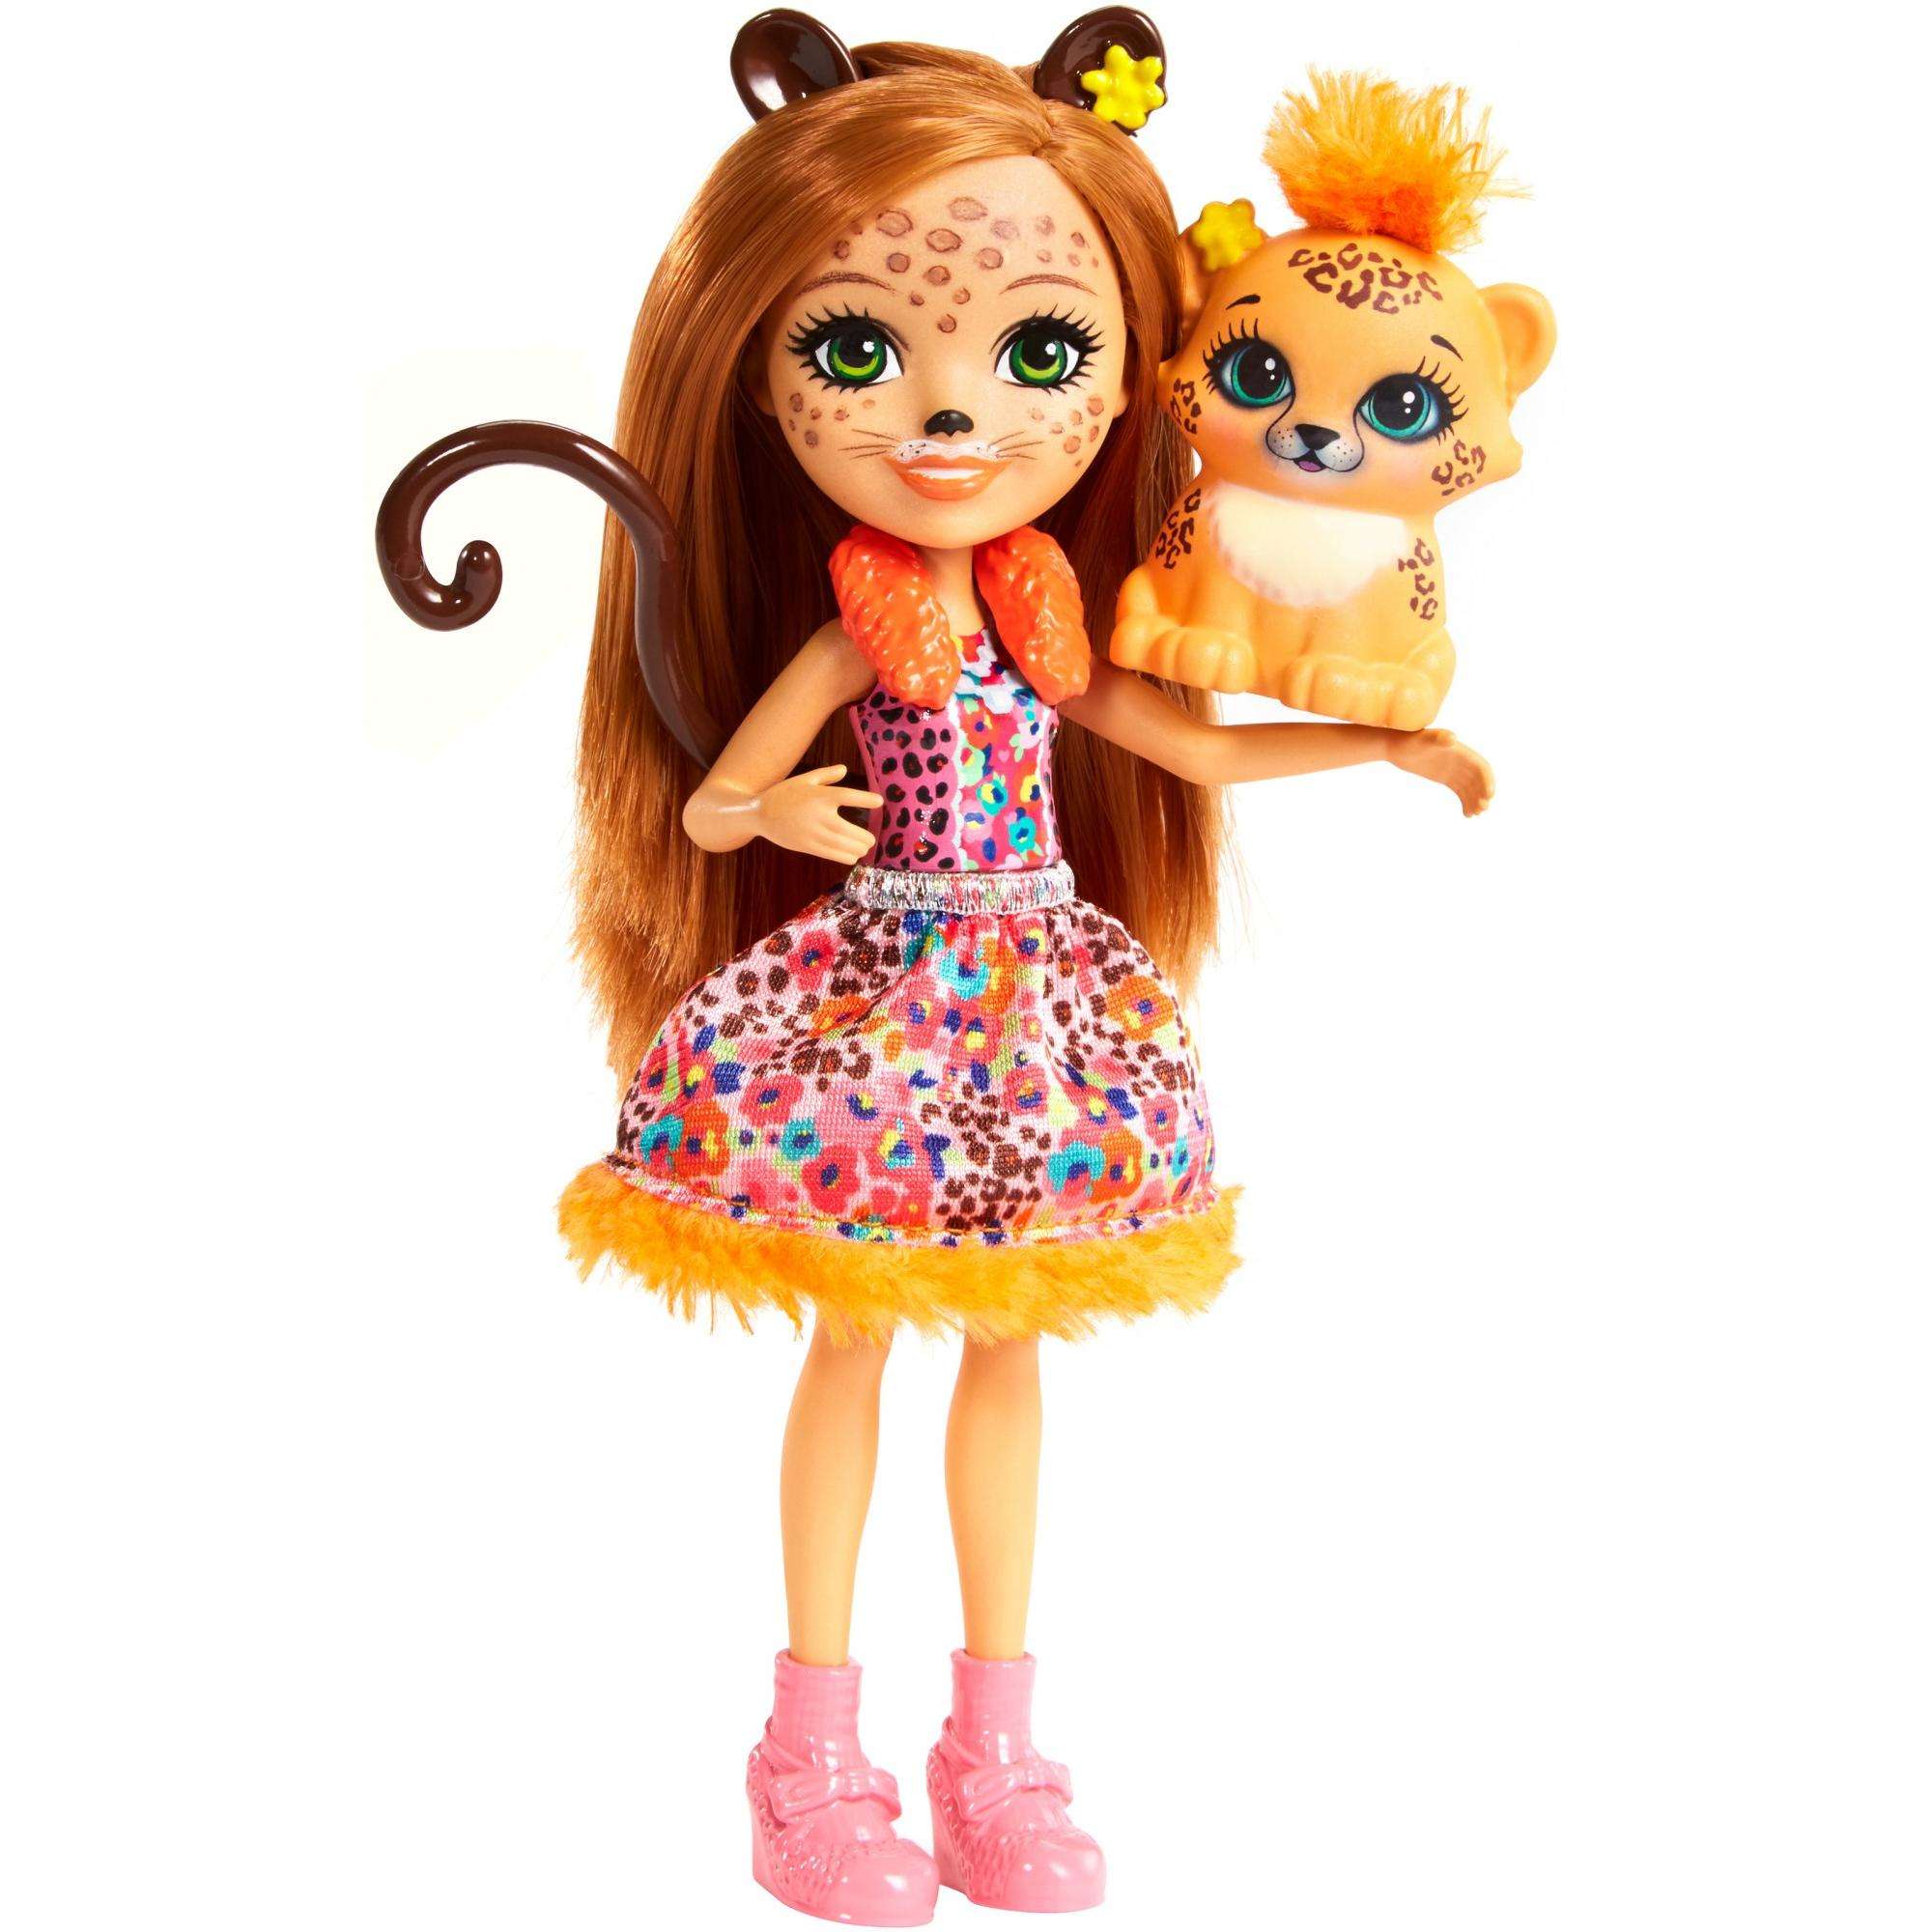 Enchantimals Cherish Cheetah Doll & Quick-Quick Cheetah Friend Figures - image 3 of 6